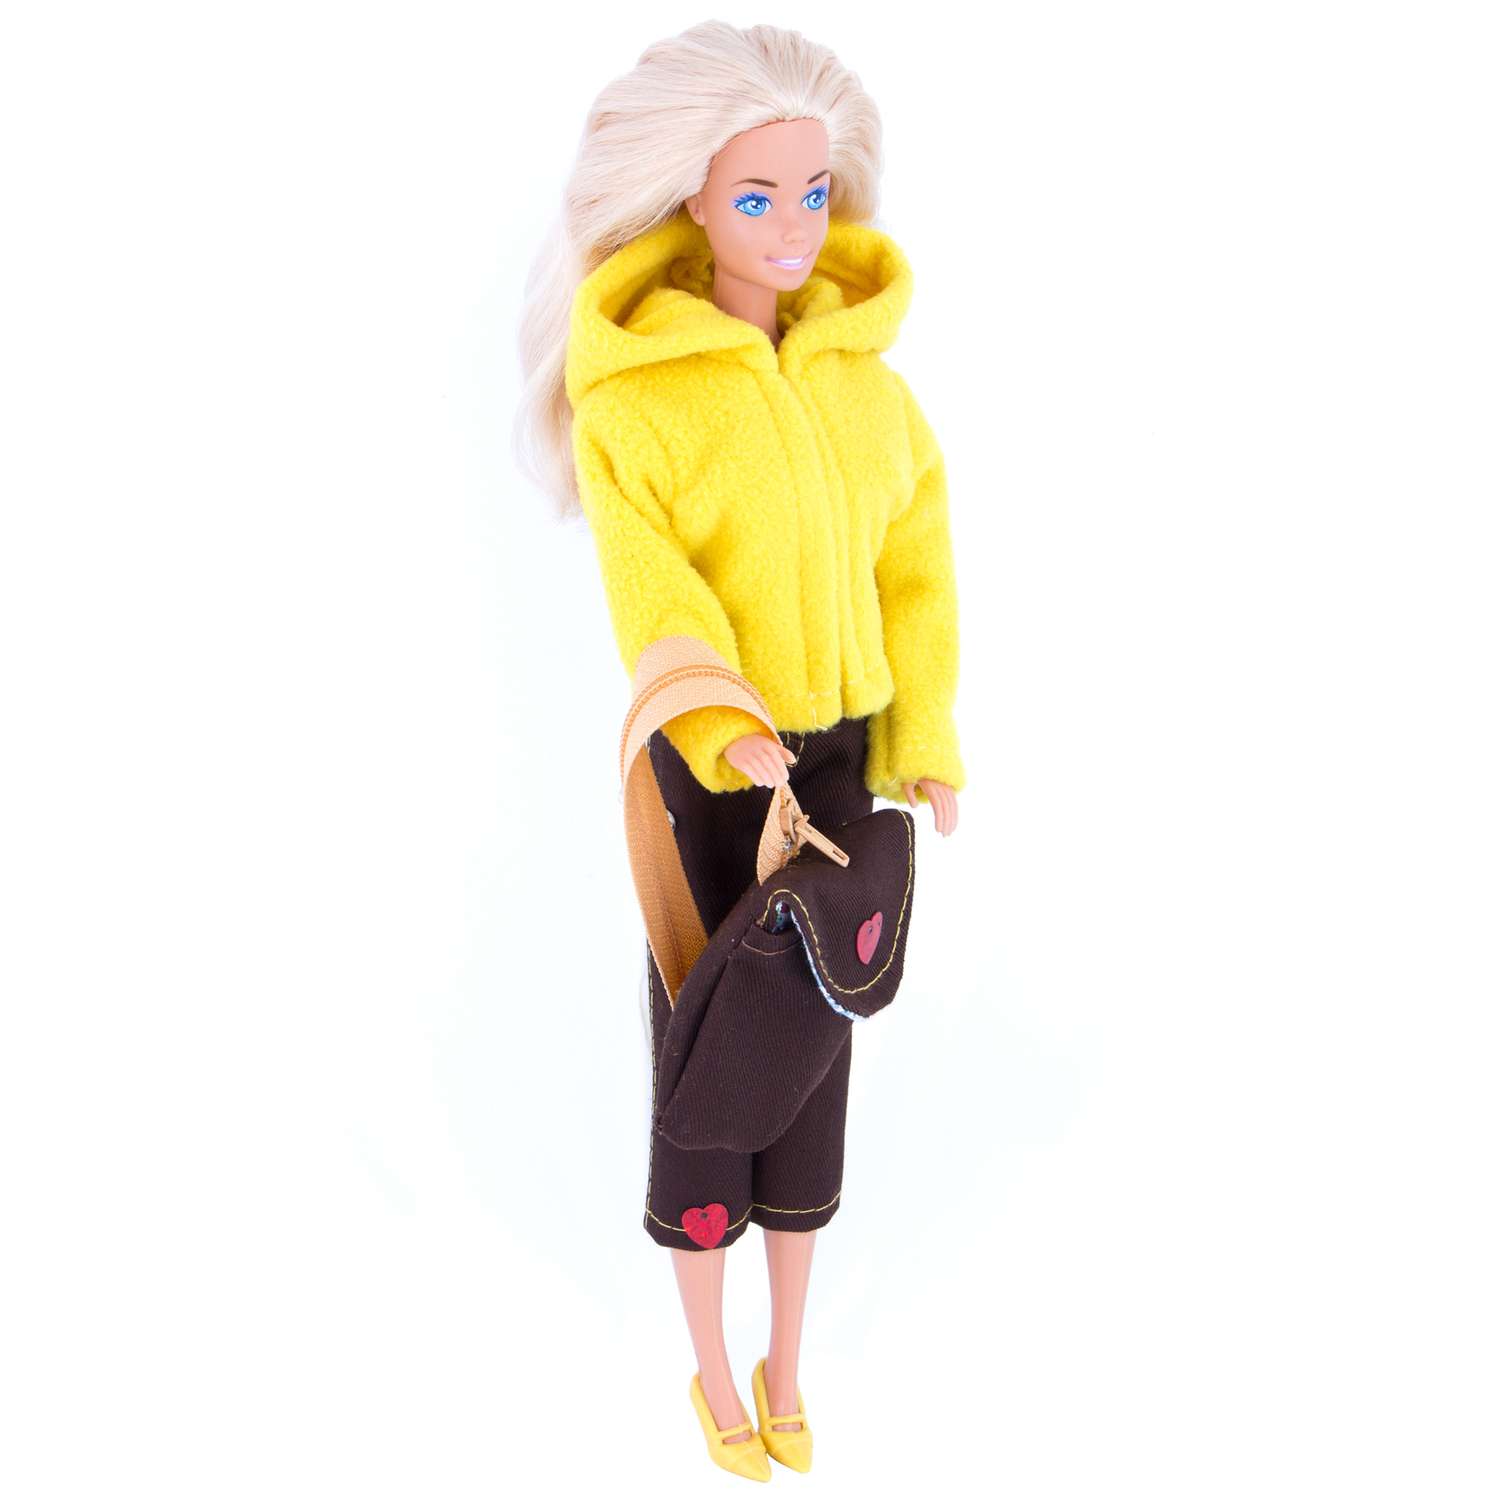 Набор одежды Модница для куклы 29 см 9999 желтый 9999желтый&amp;коричневый - фото 3